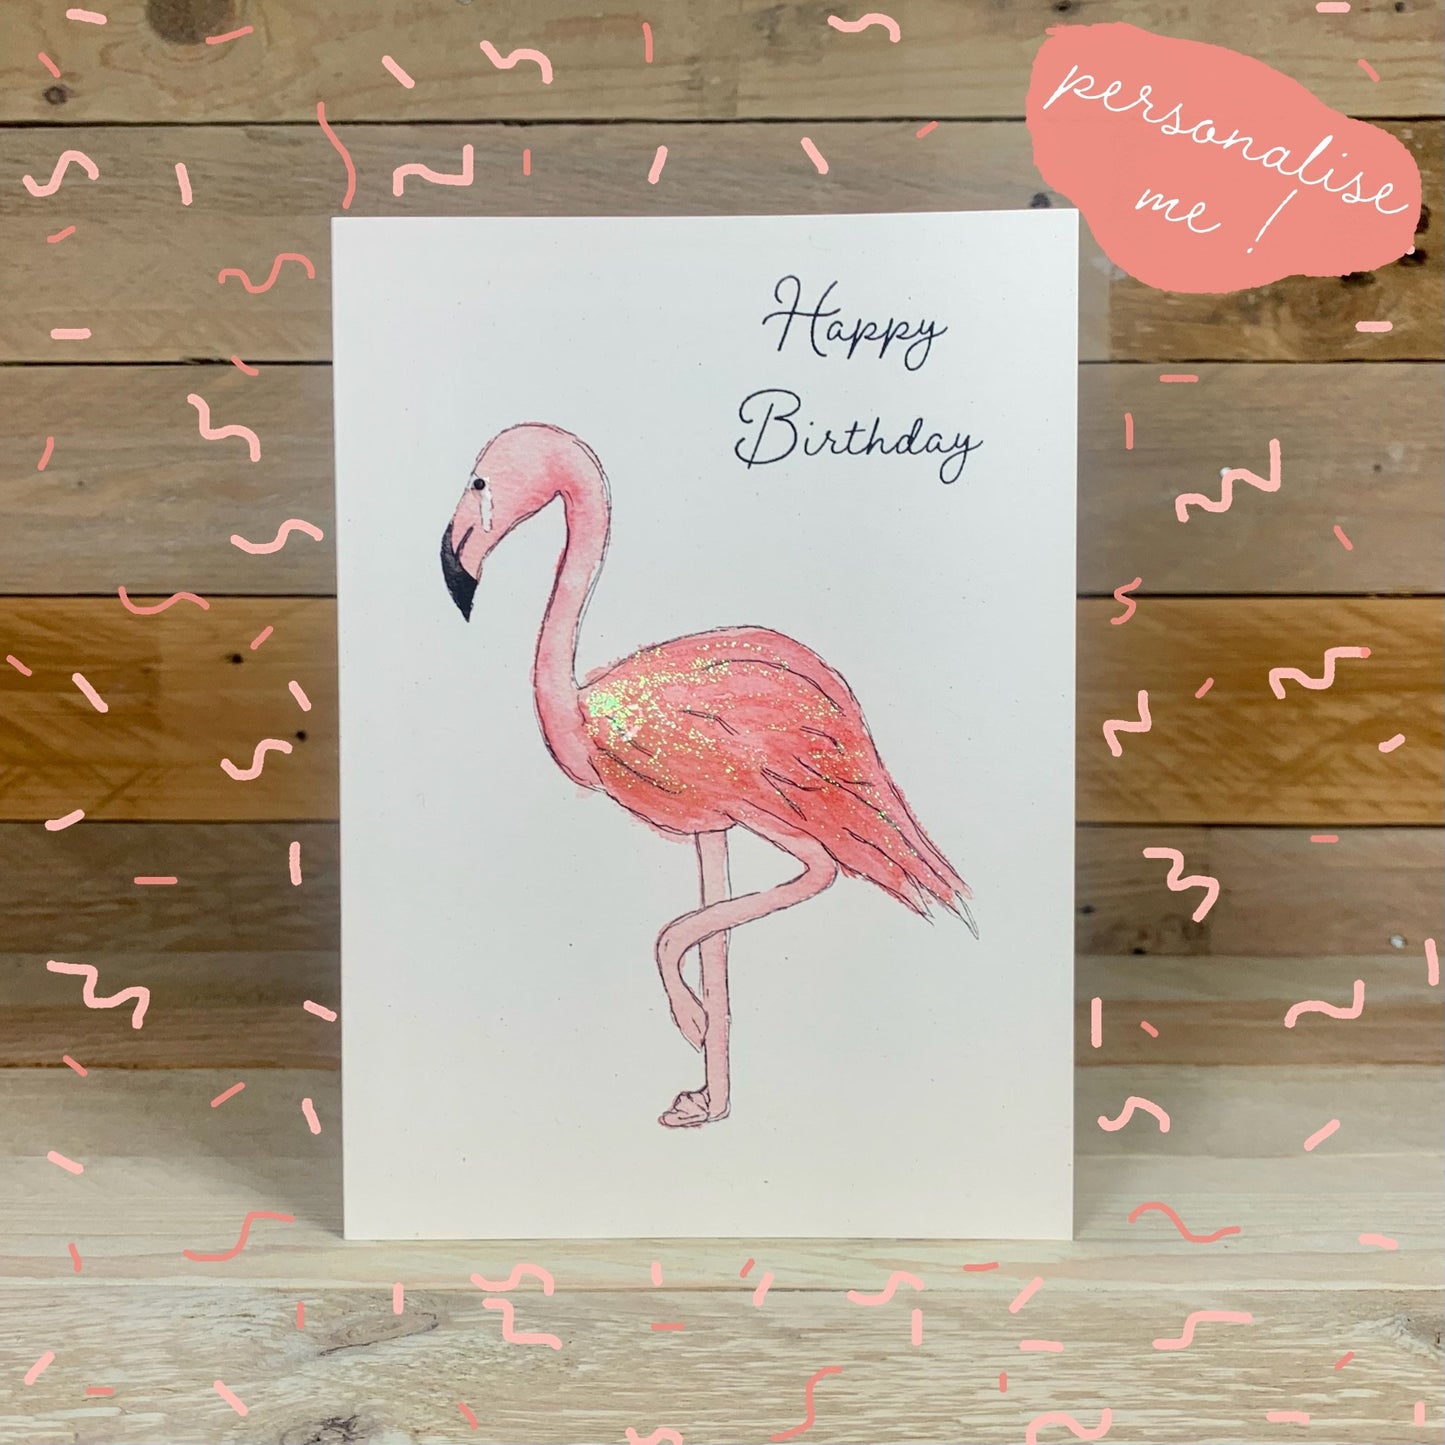 Fifi the Flamingo Birthday Card - Arty Bee Designs 